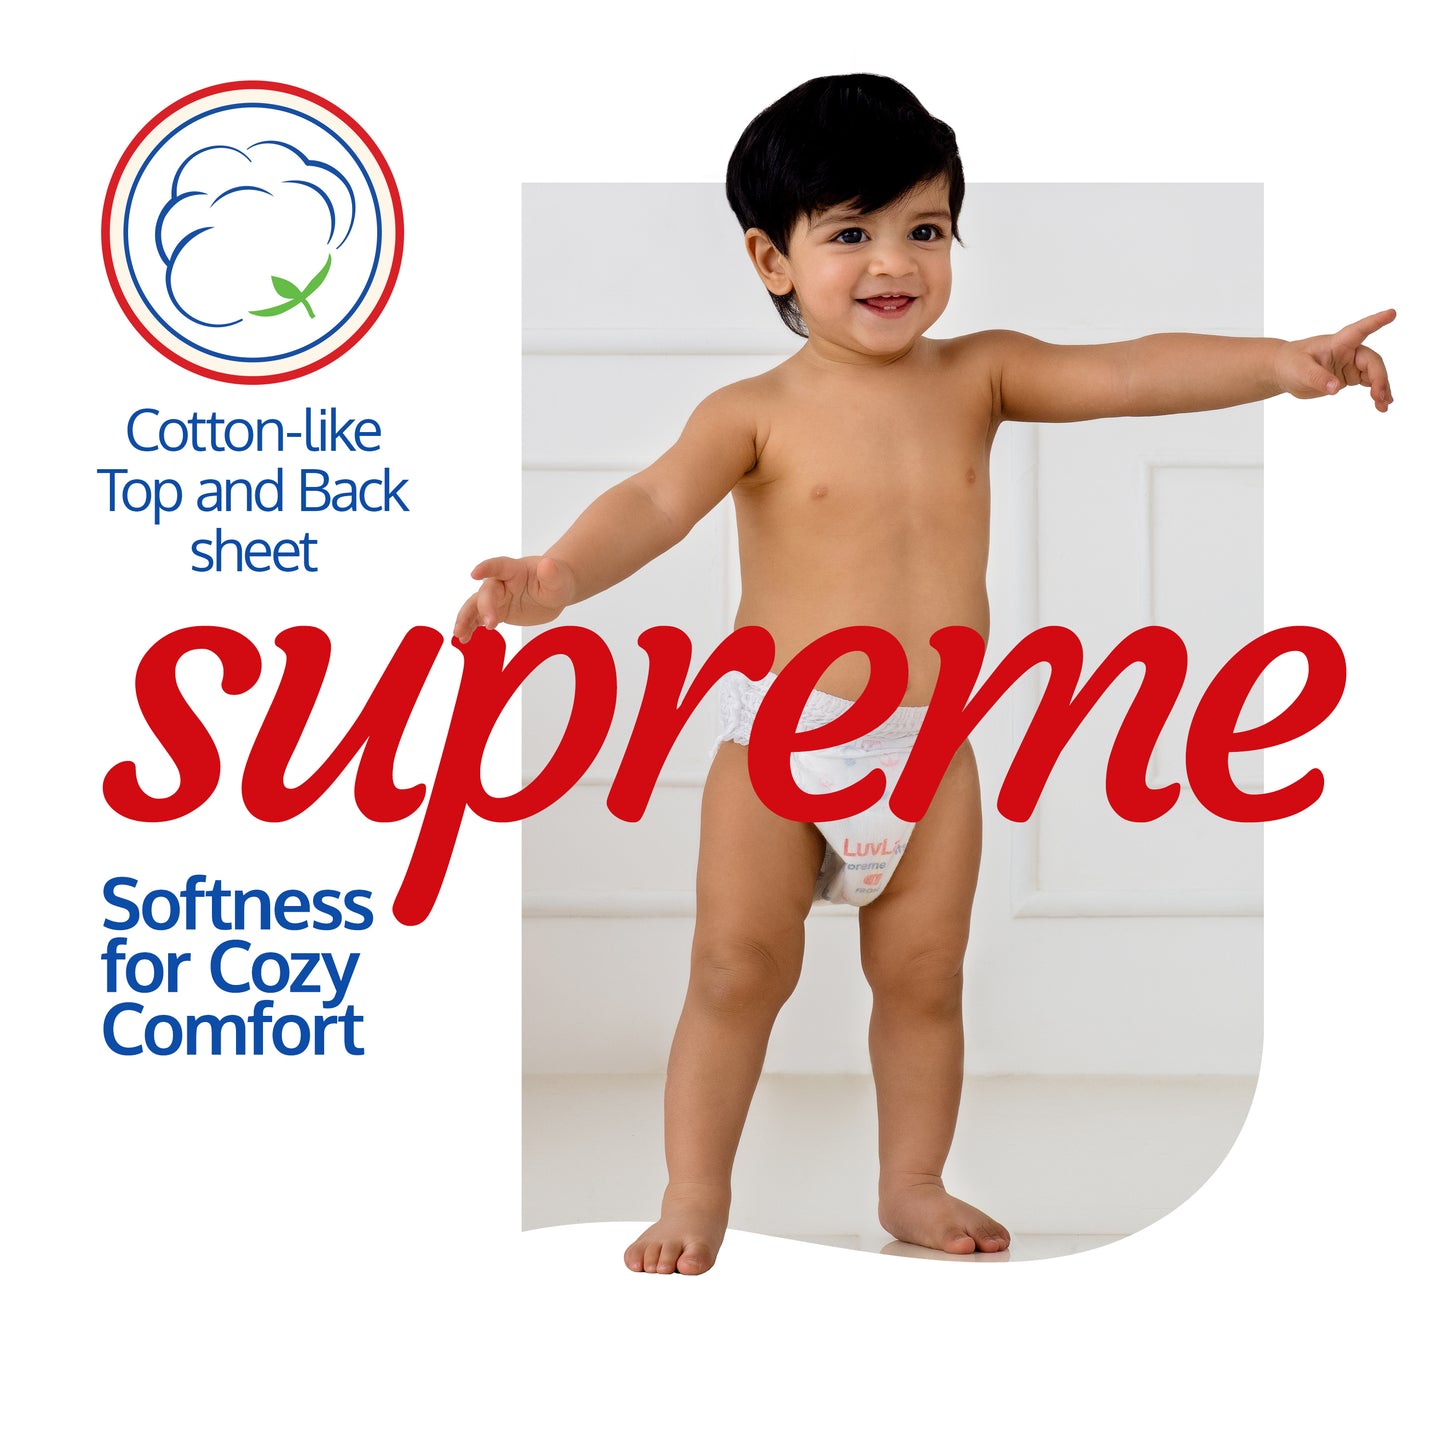 Supreme Diaper Pants Medium (M) 7 to 12Kg, 36Pc